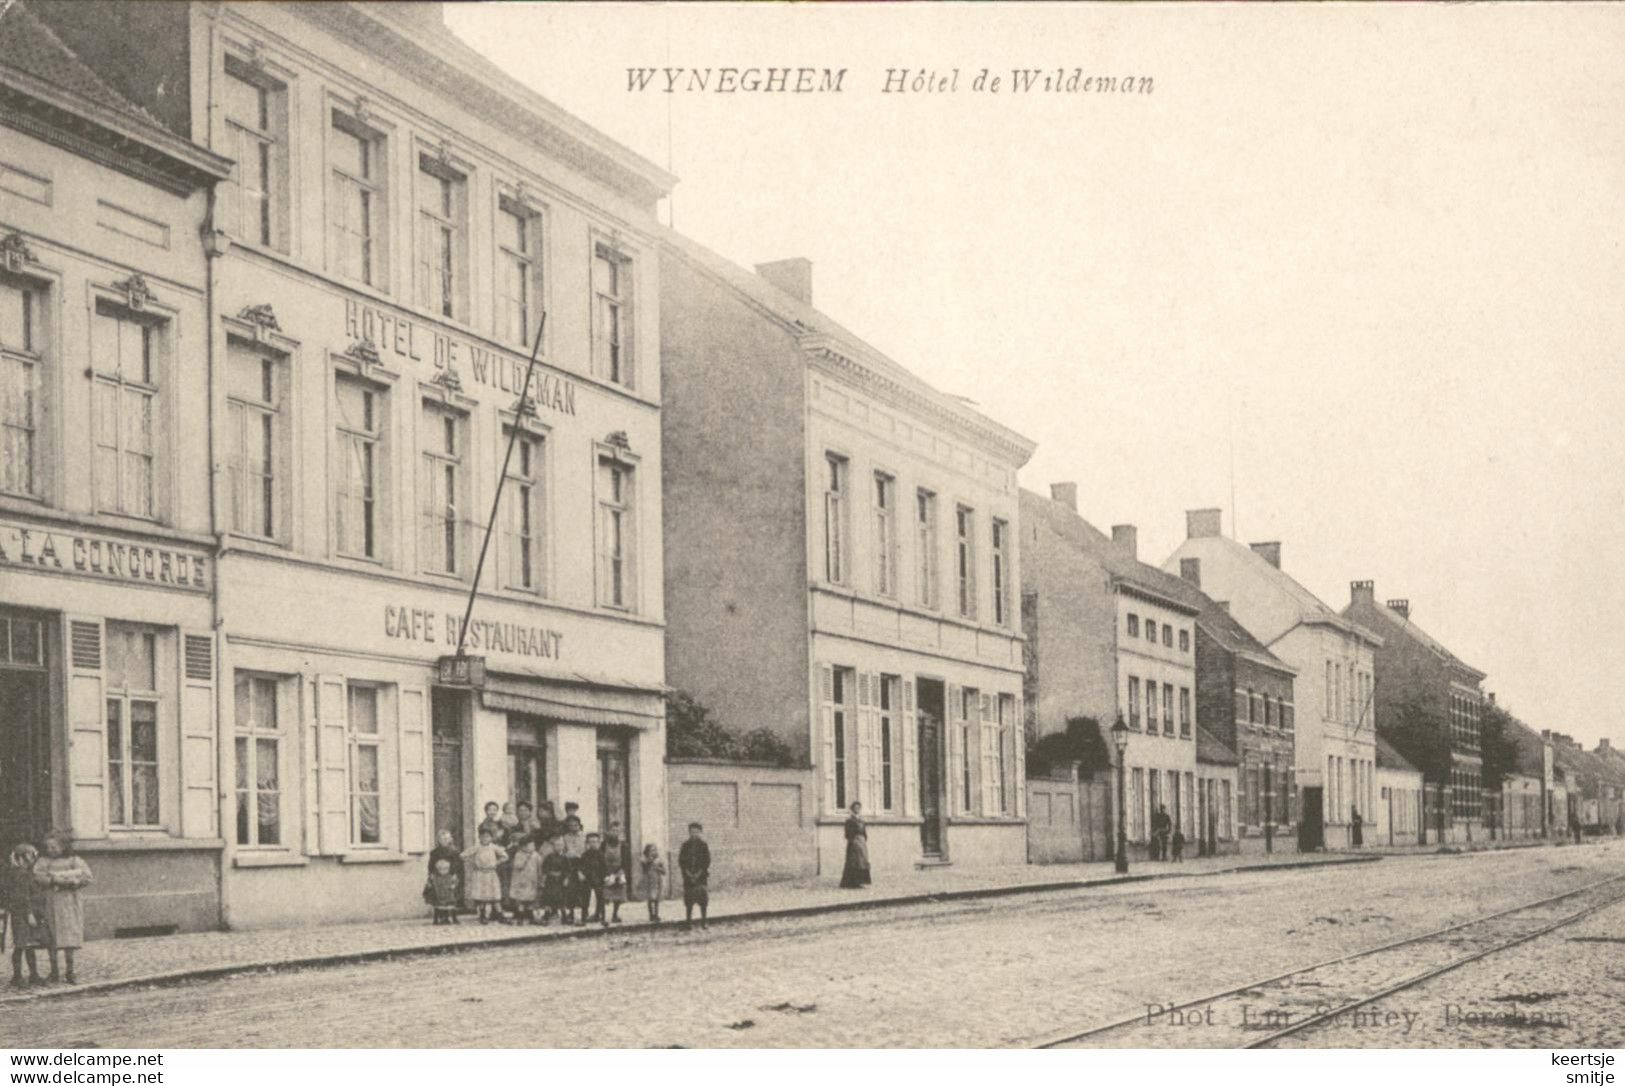 WIJNEGEM CA. 1910 HOTEL DE WILDEMAN CAFÉ RESTAURANT ERNAAST LA CONCORDE - KLEINE ANIMATIE - SCHREY BERCHEM - Wijnegem